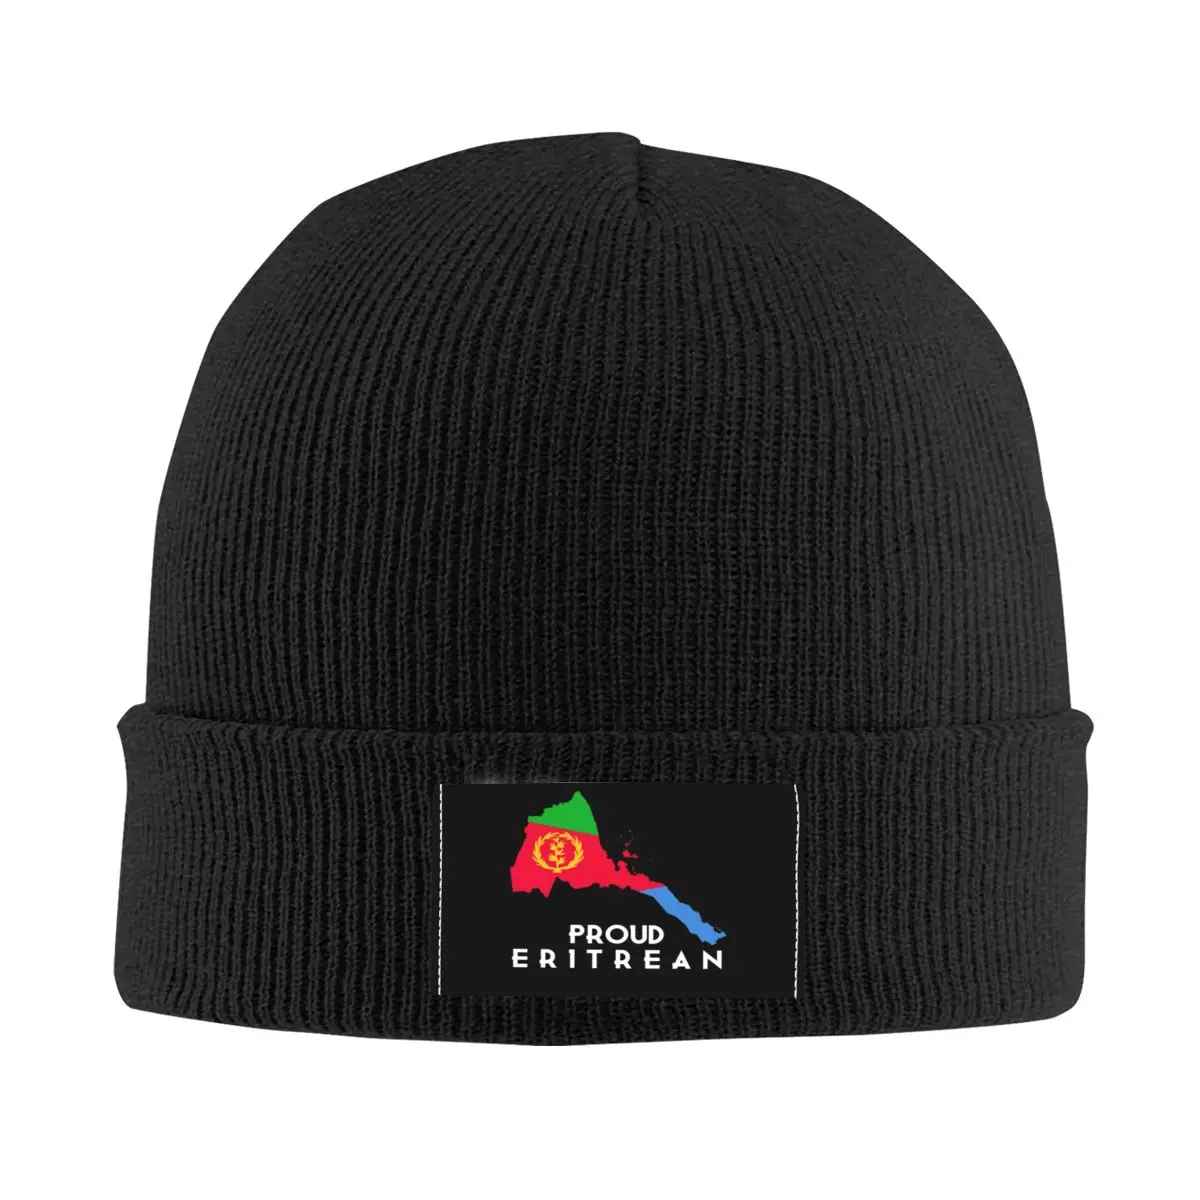 Proud Eritrean Flag Bonnet Hat Knitting Hats Men Women Fashion Unisex Adult Warm Winter Beanies Cap 1